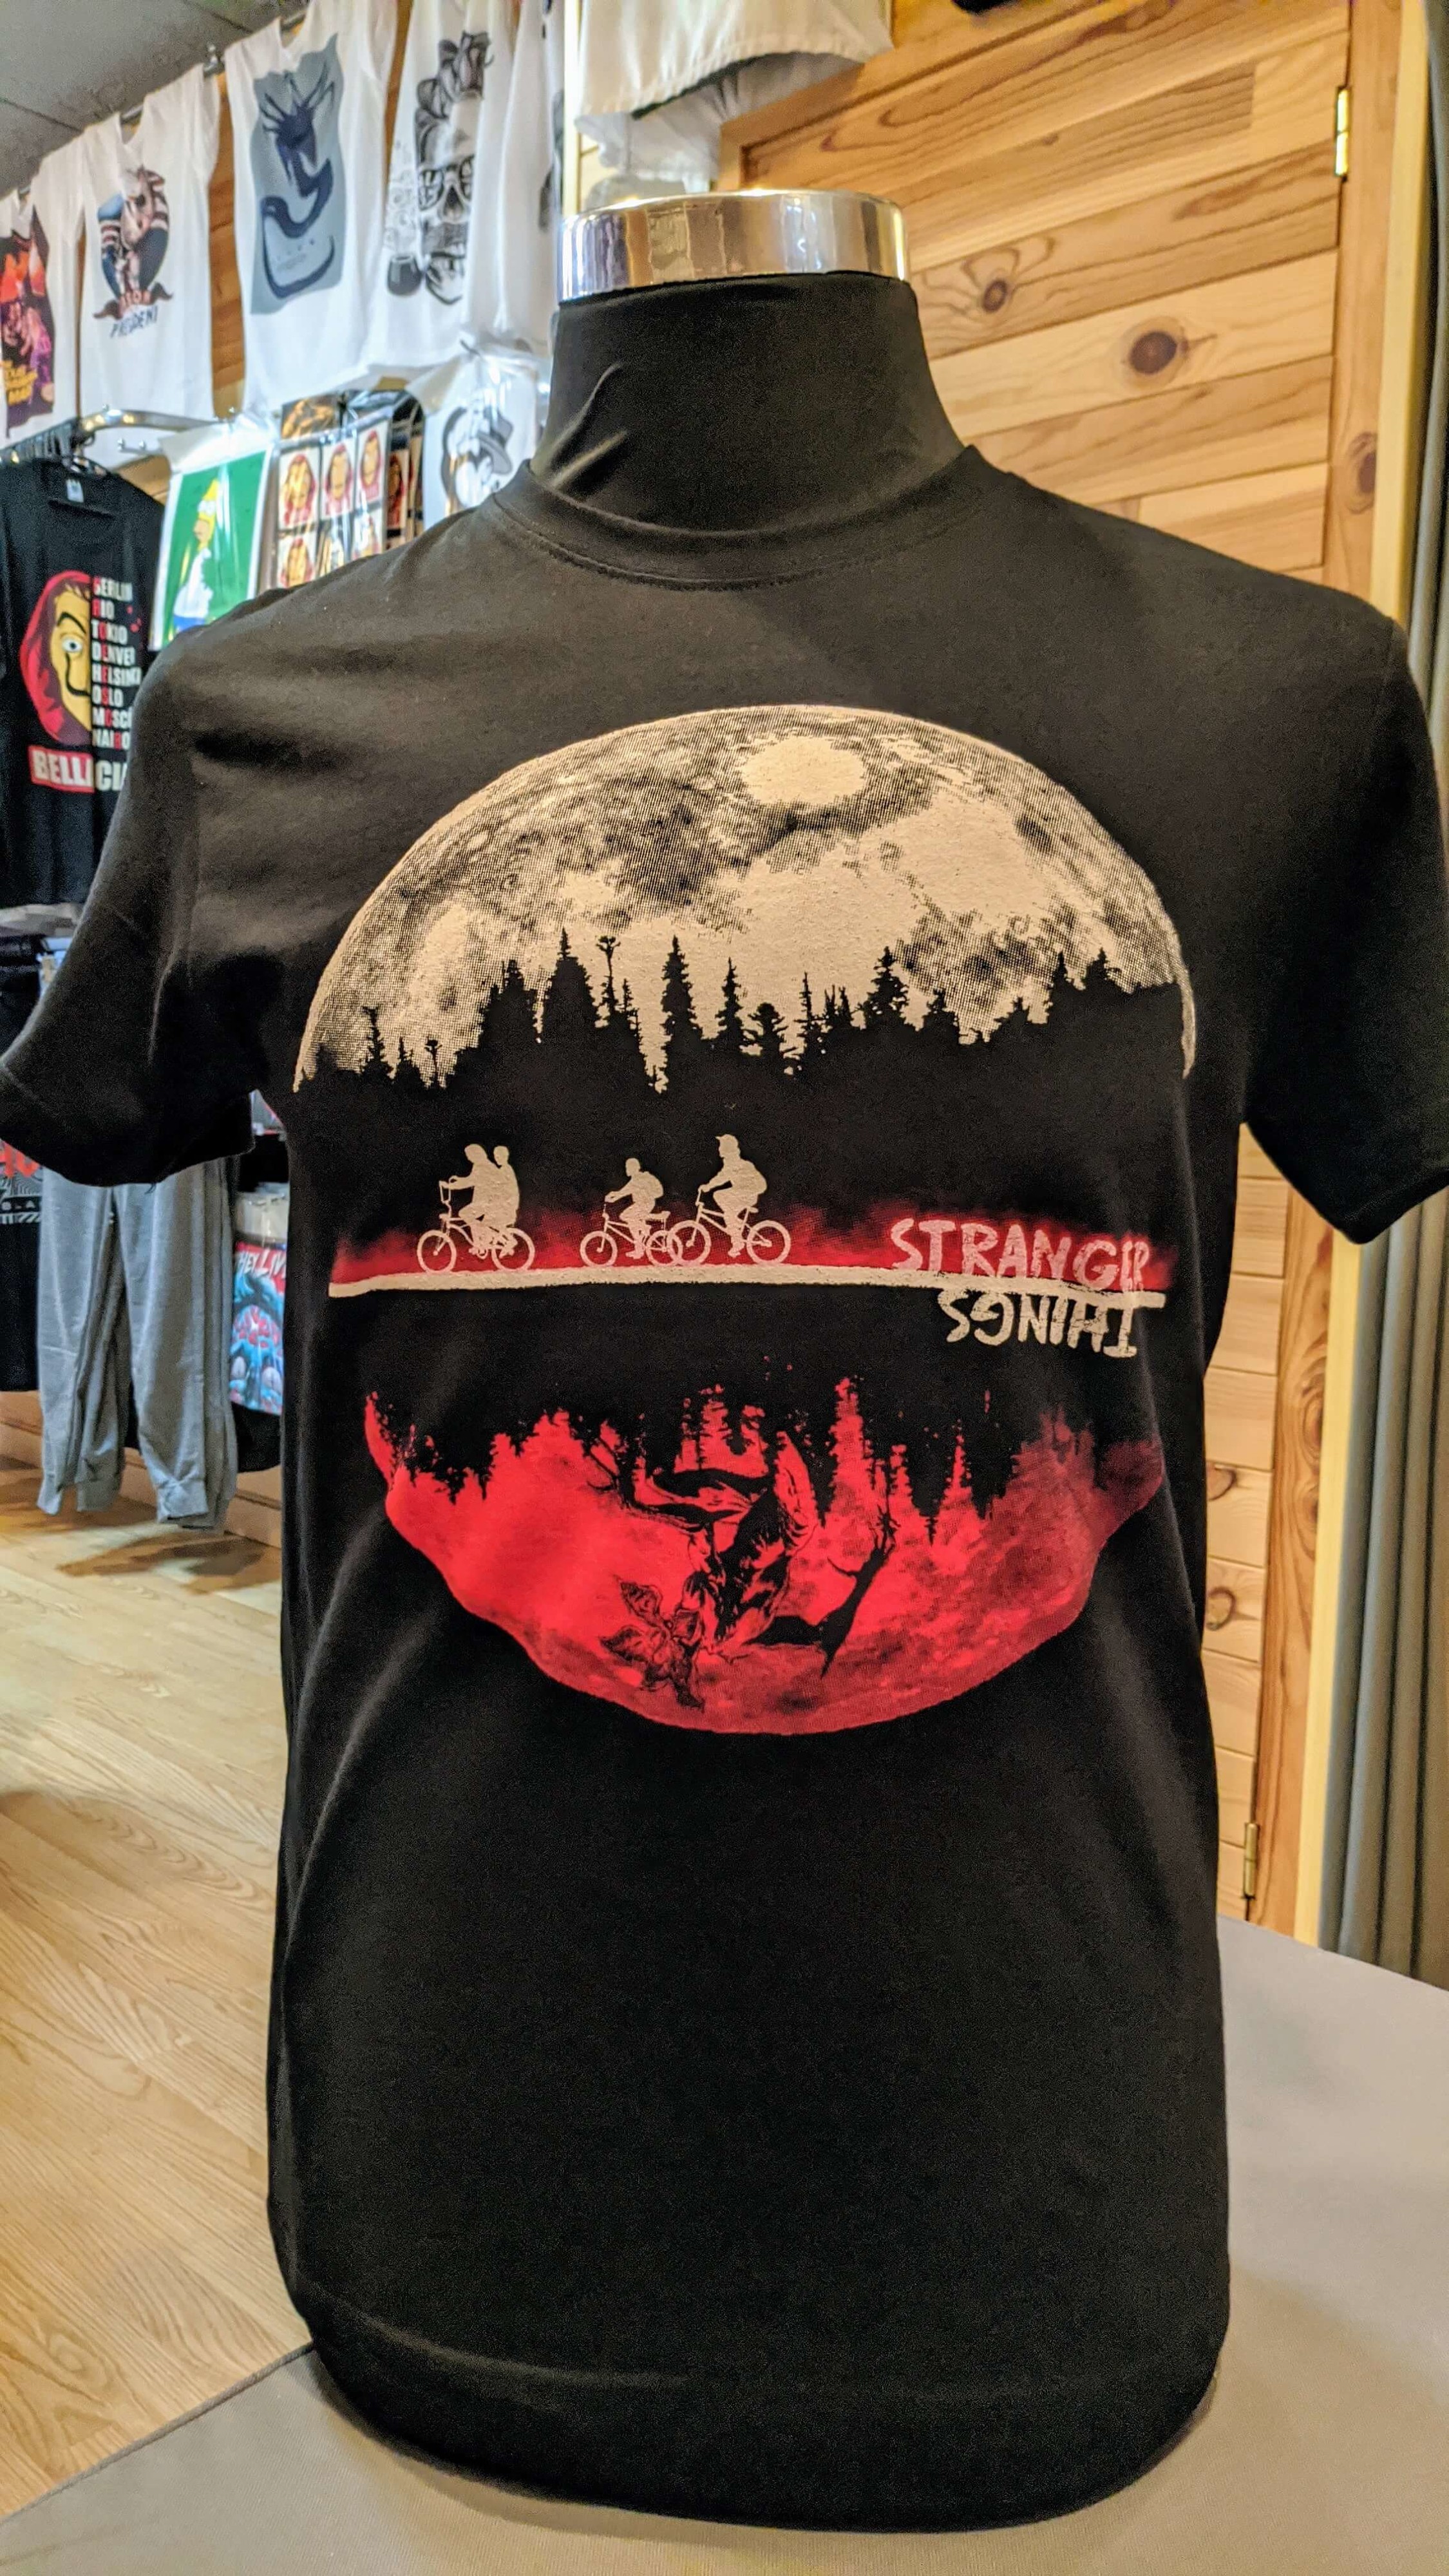 ambición adiós Frente Stranger Things | Camisetas freak - Freakland Store